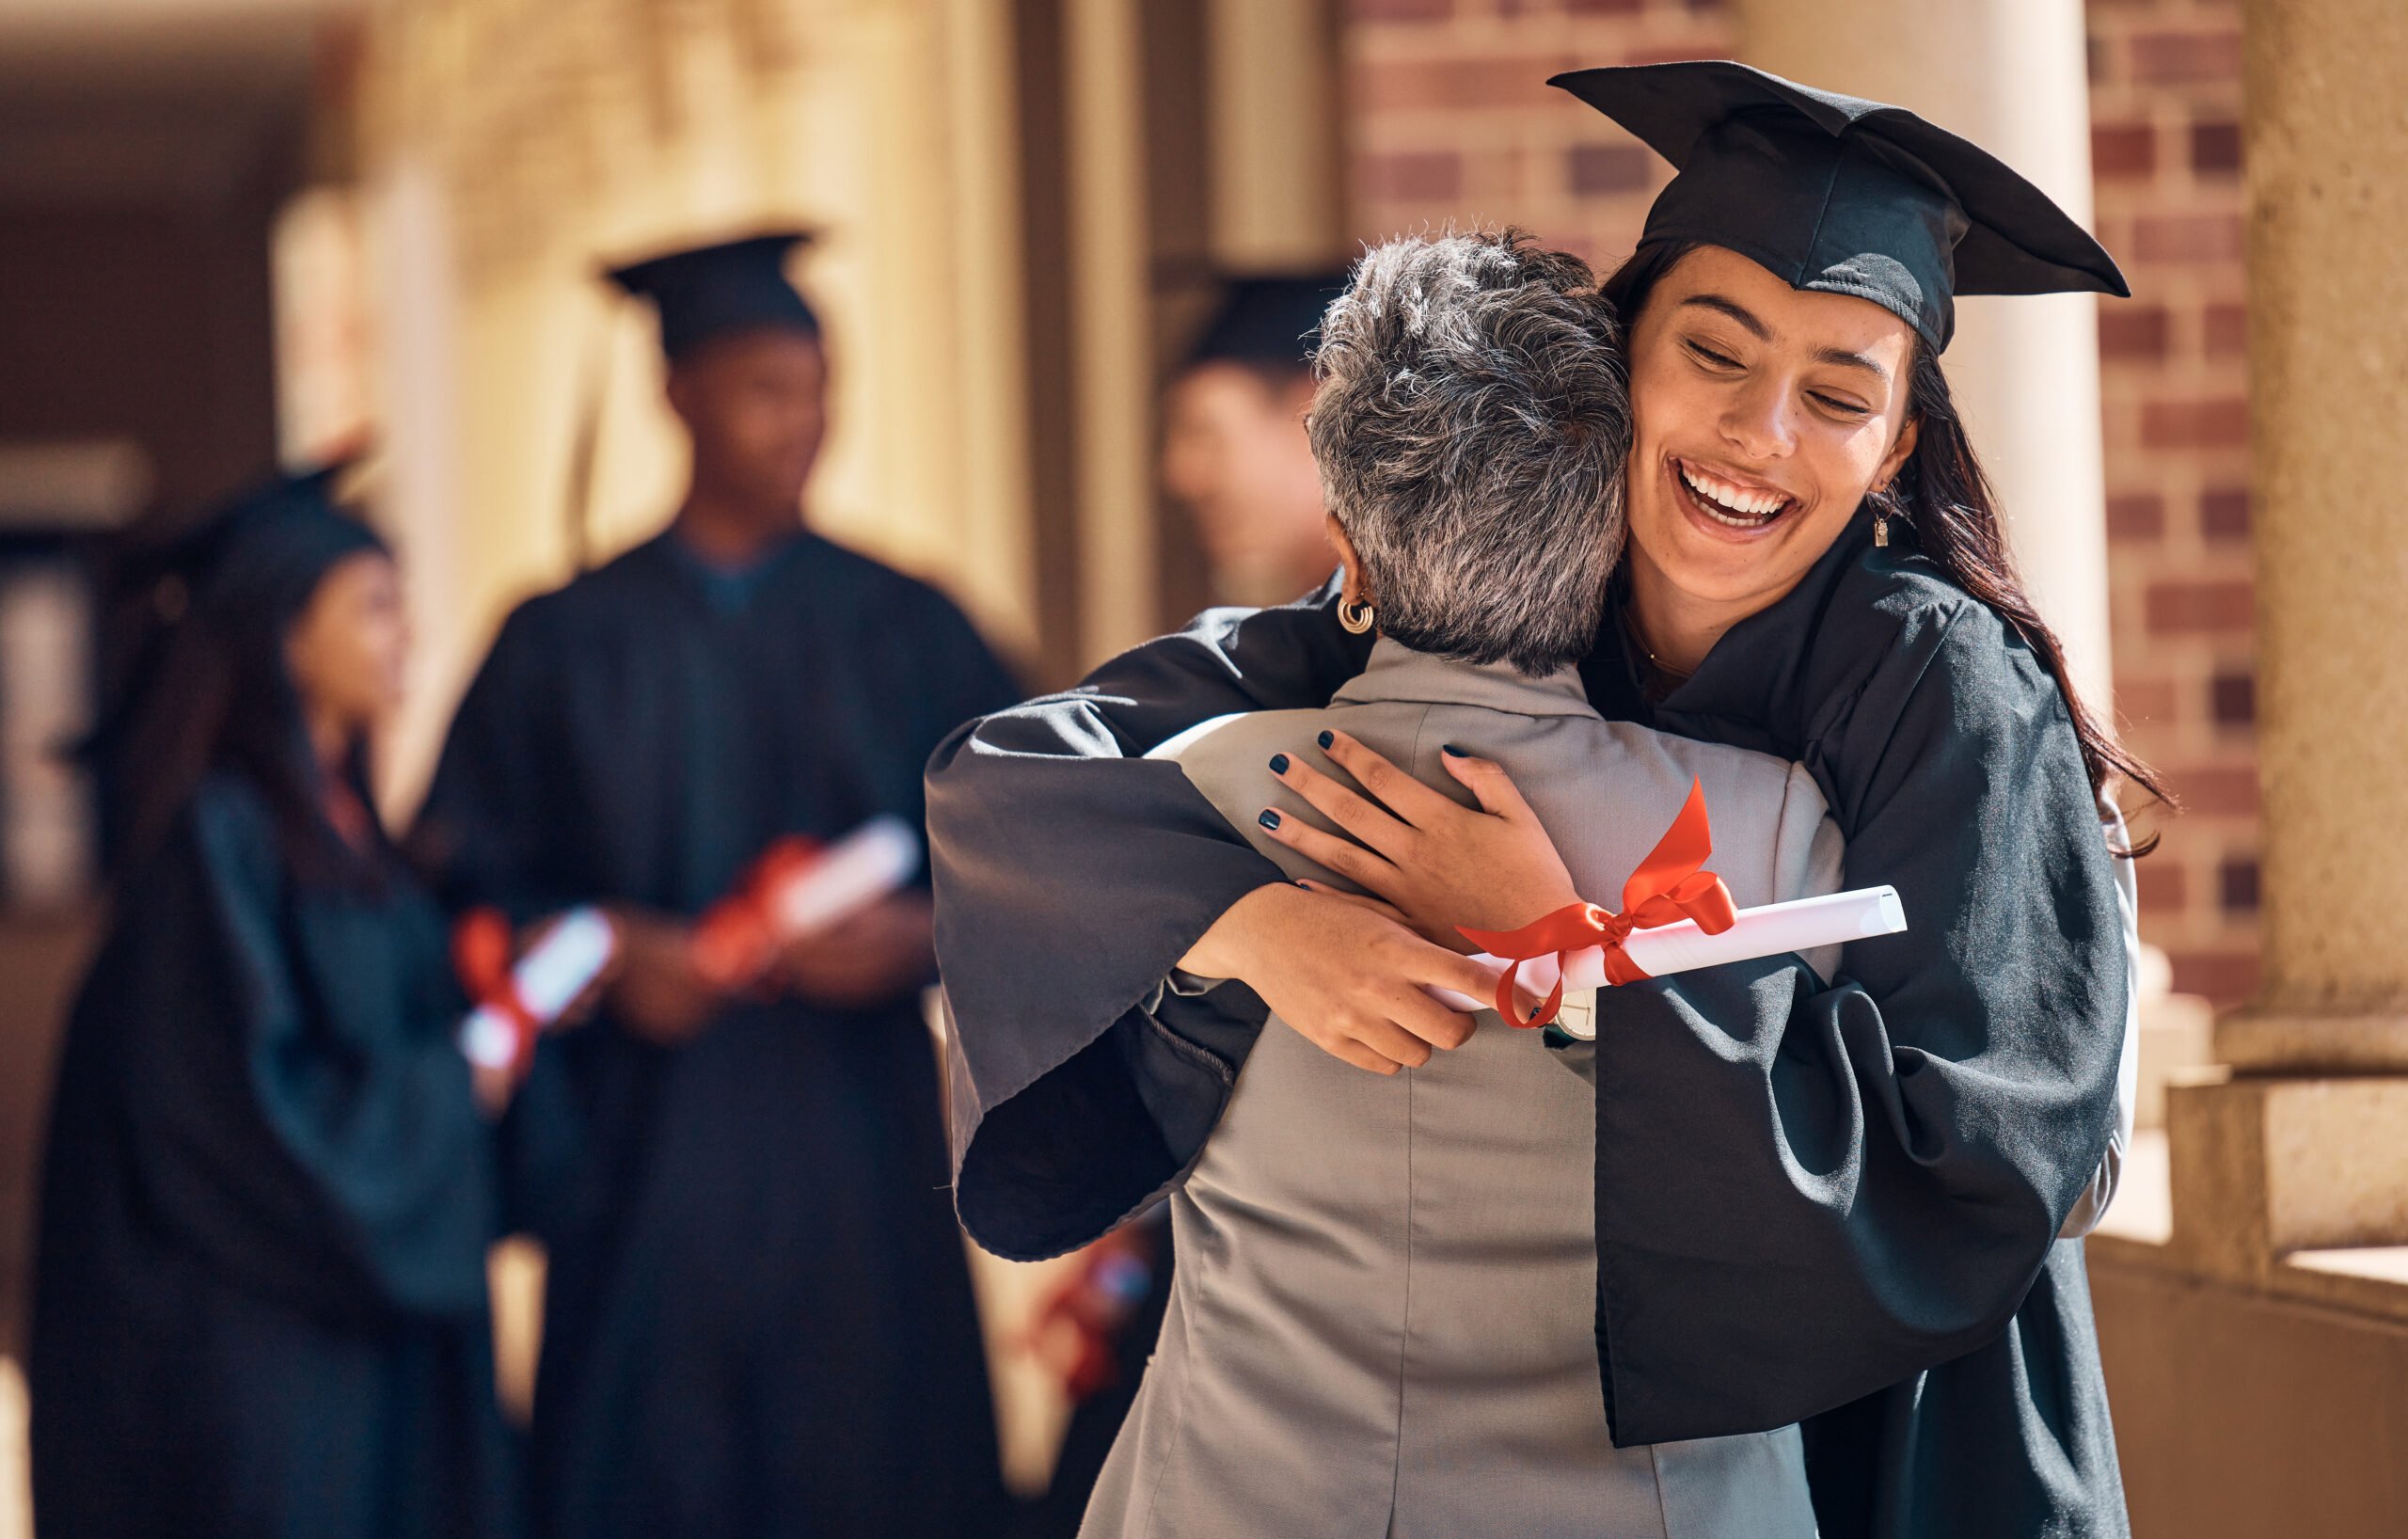 Older person hugging a graduate wearing a cap